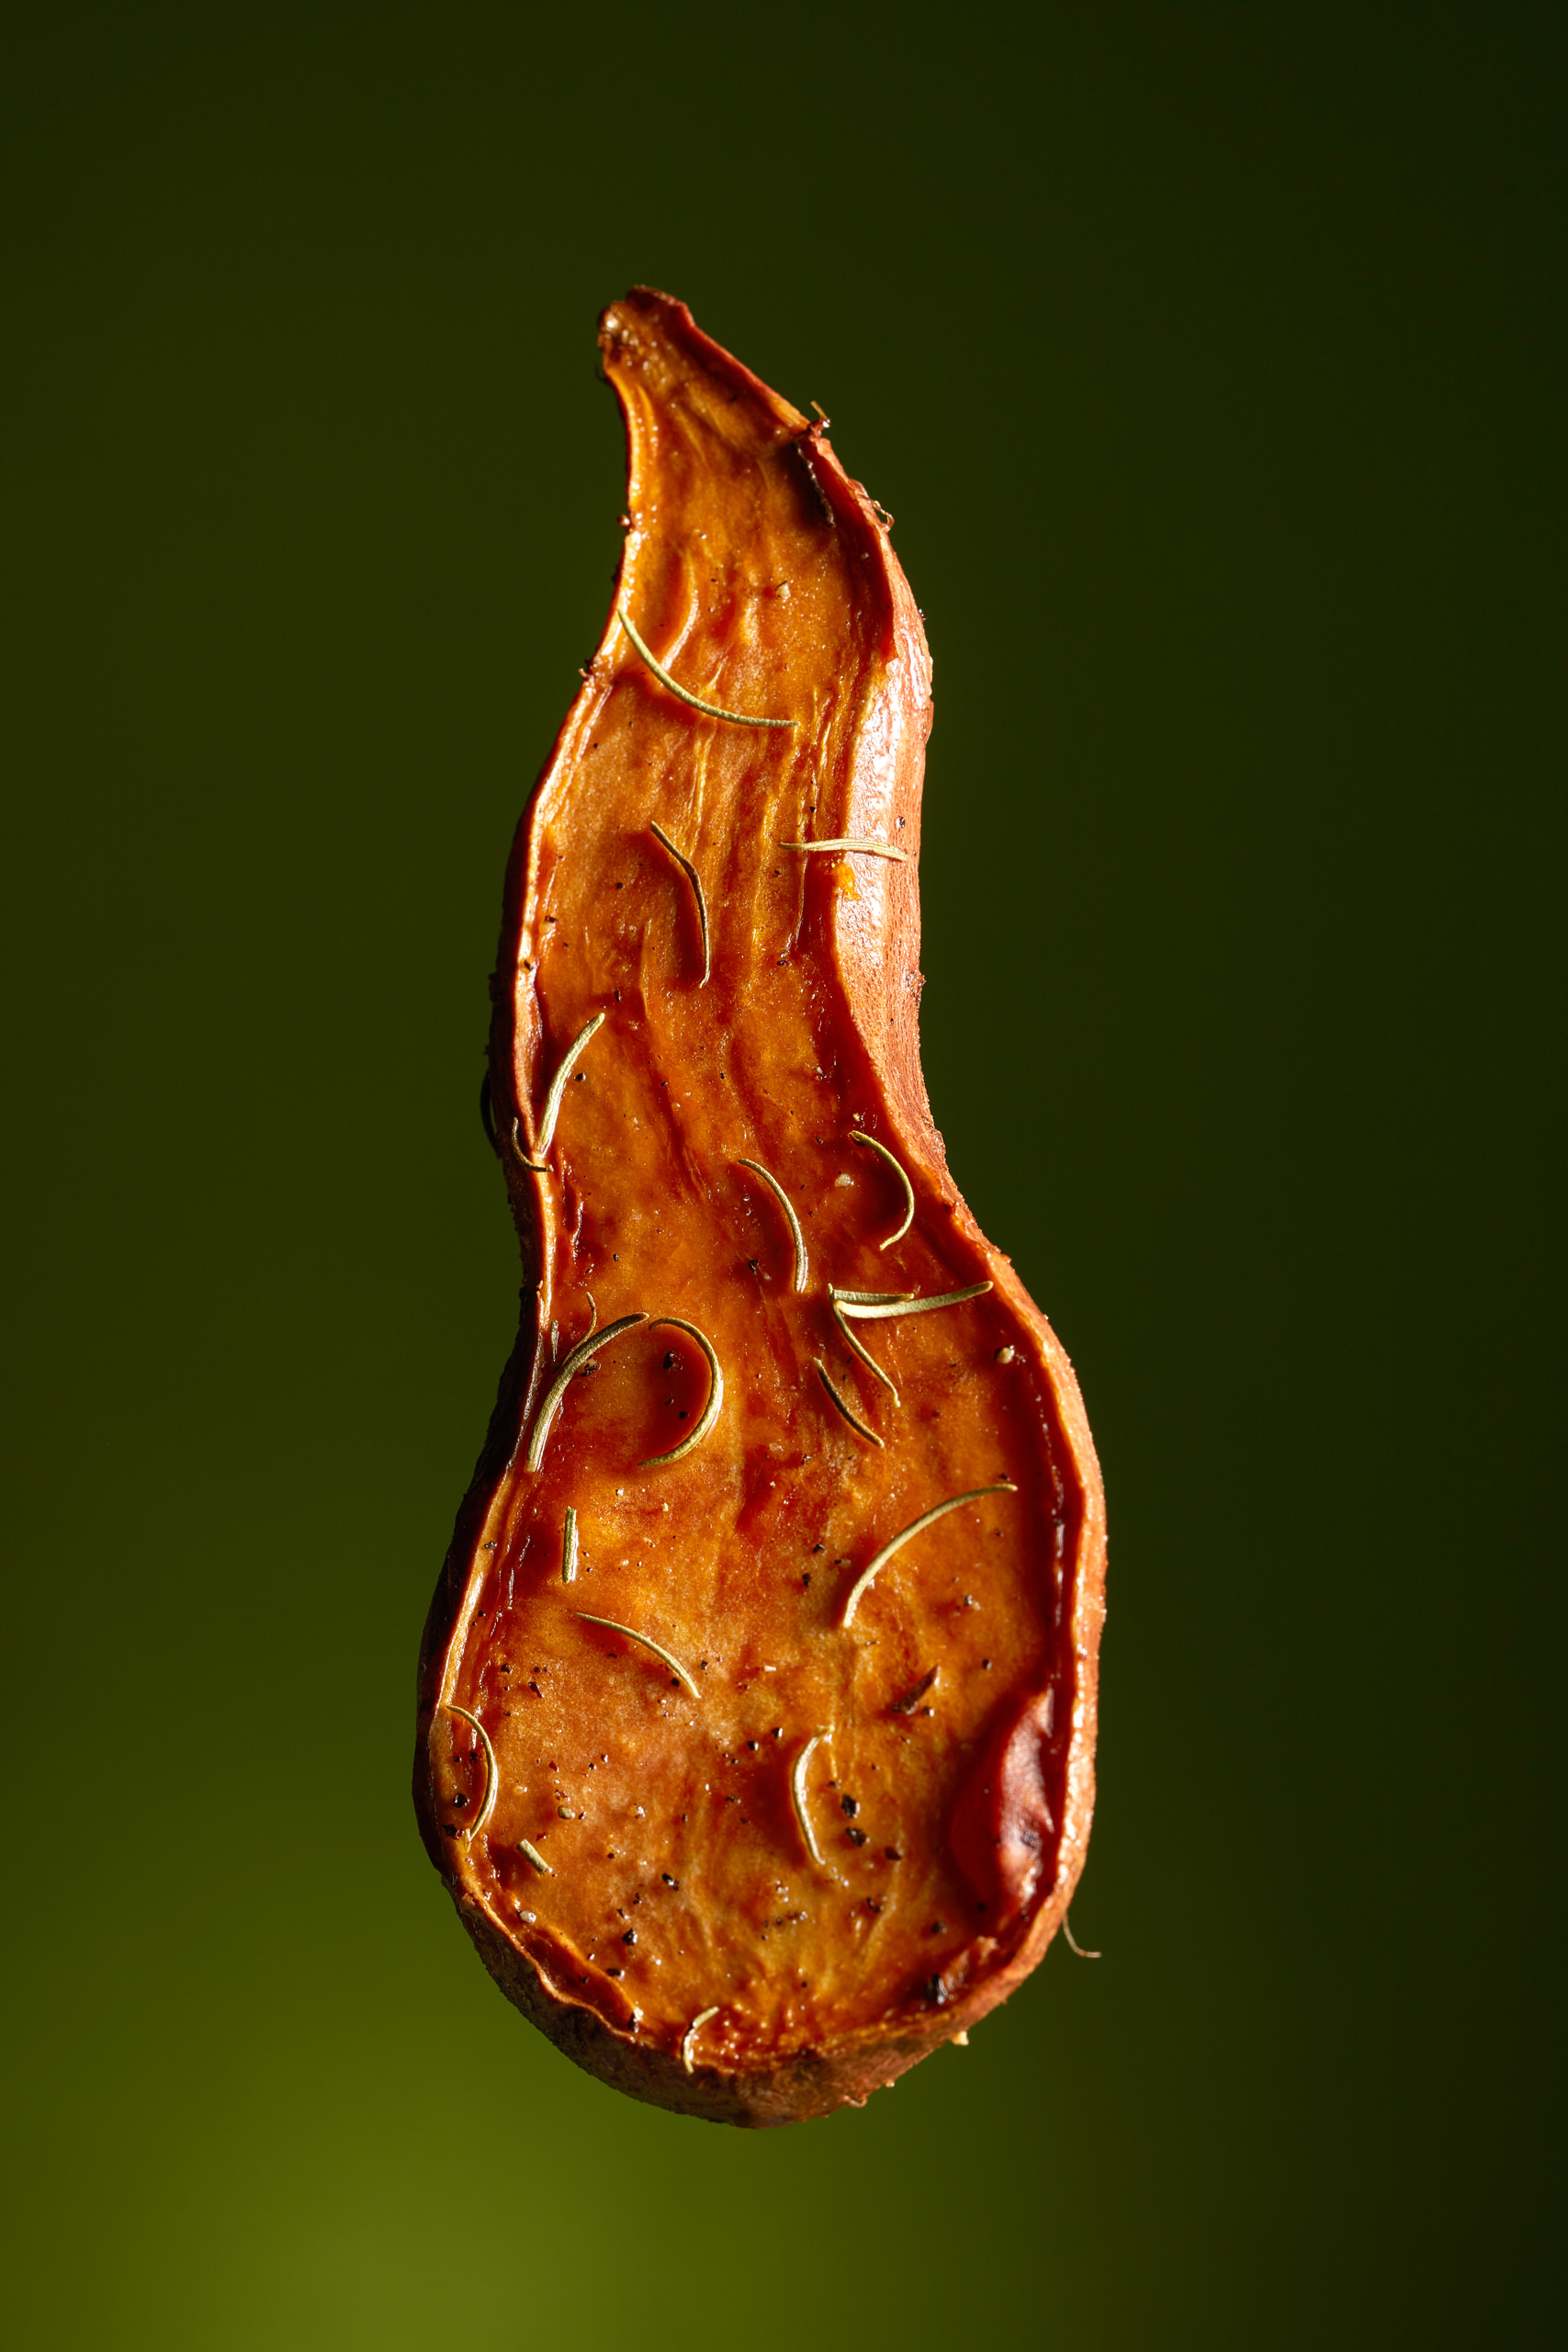 Creative food image of a floating sweet potato